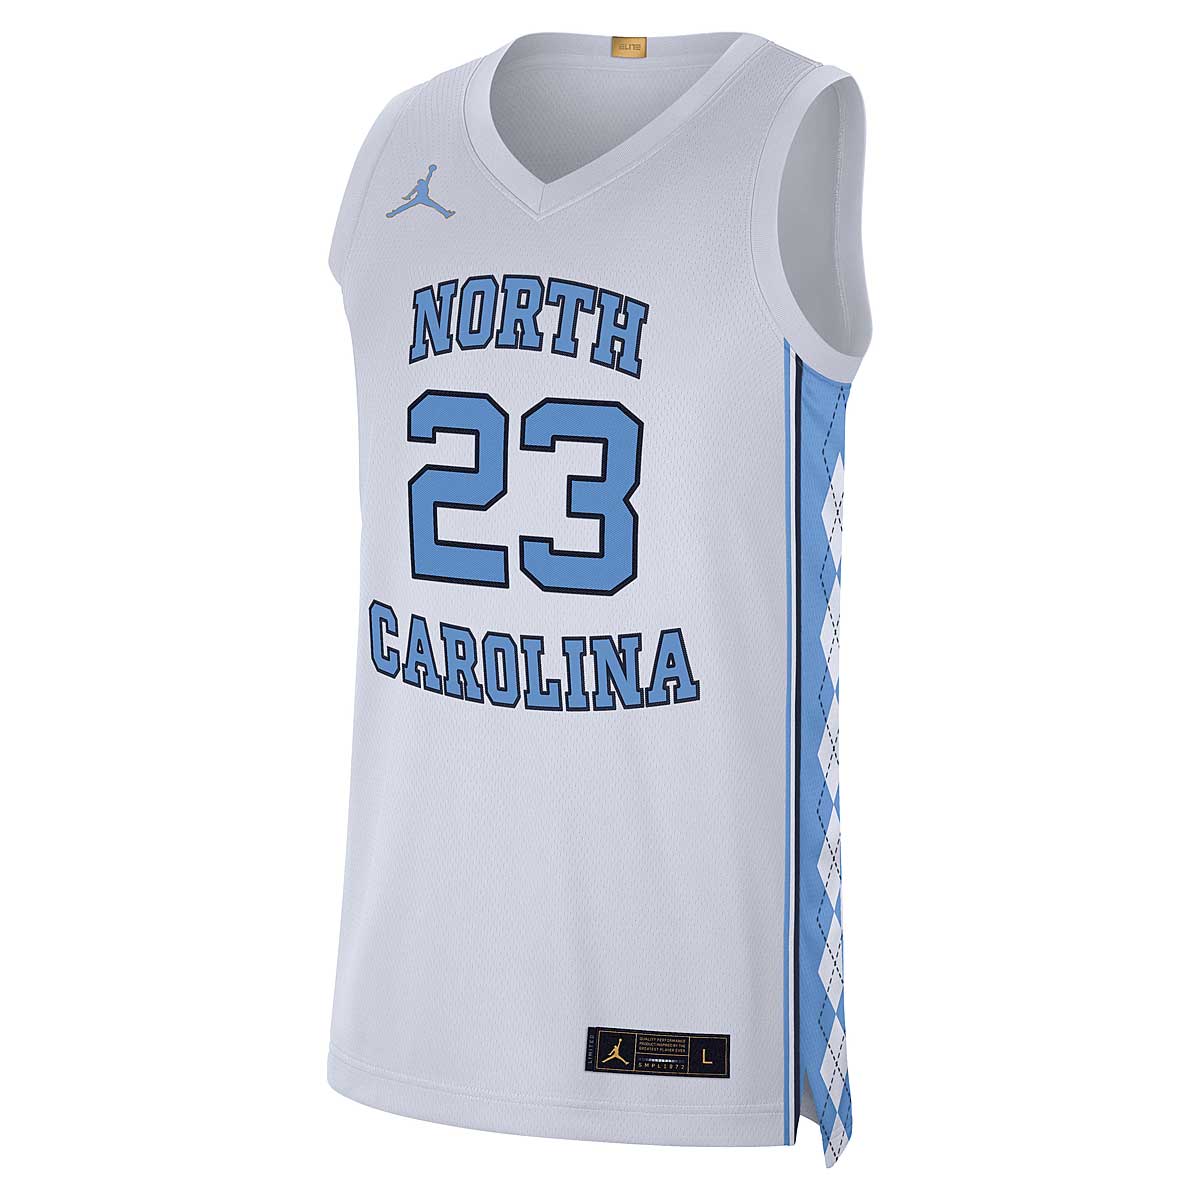 Jordan Ncaa North Carolina Tarheels Limited Edition Jersey Michael Jordan, White/valor Blue S